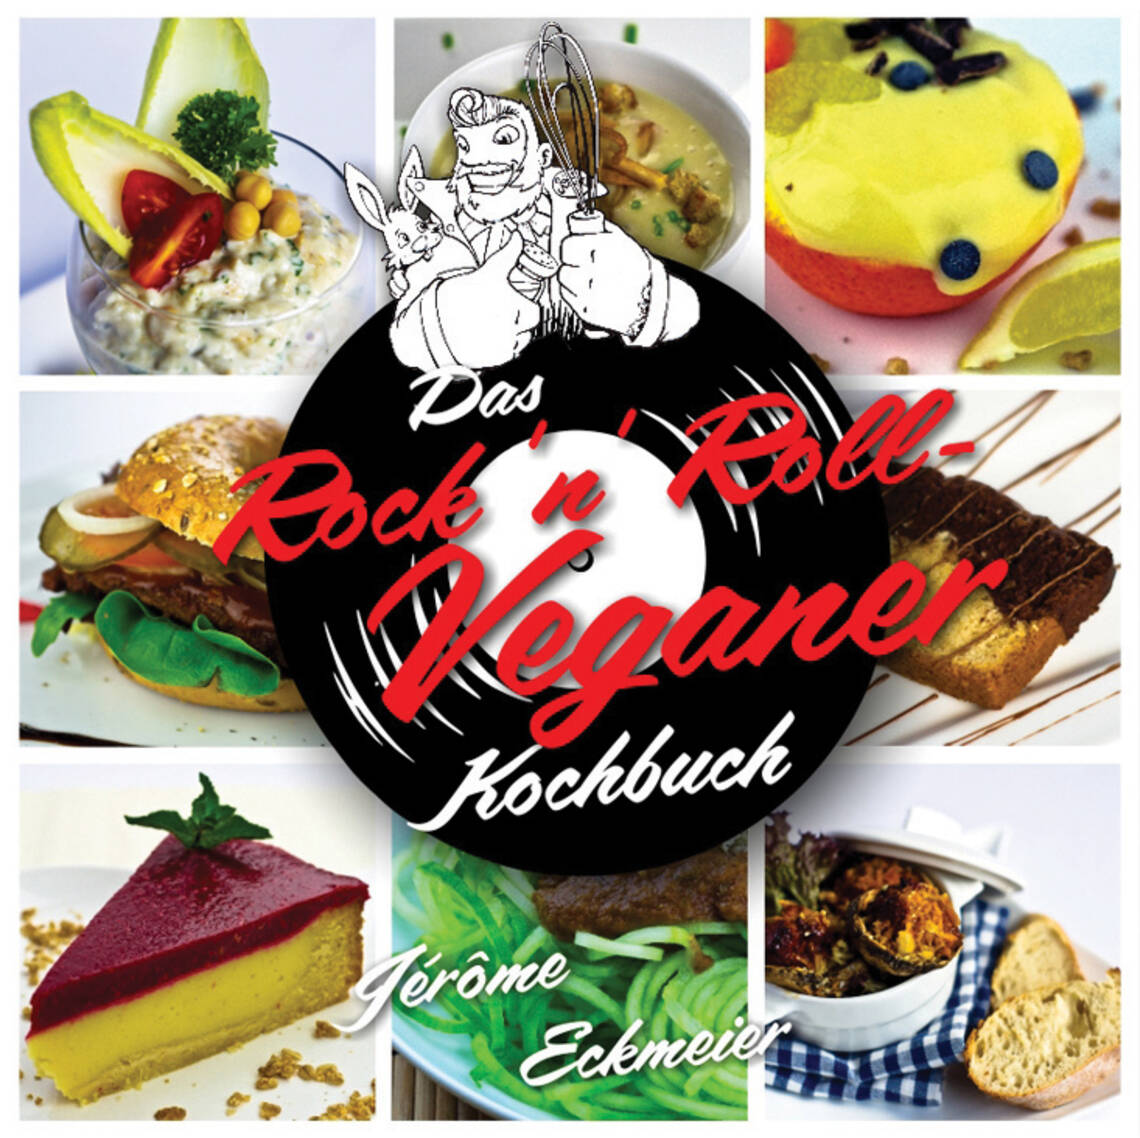 Das Rock'n'Roll Veganer Kochbuch von Jérôme Eckmeier